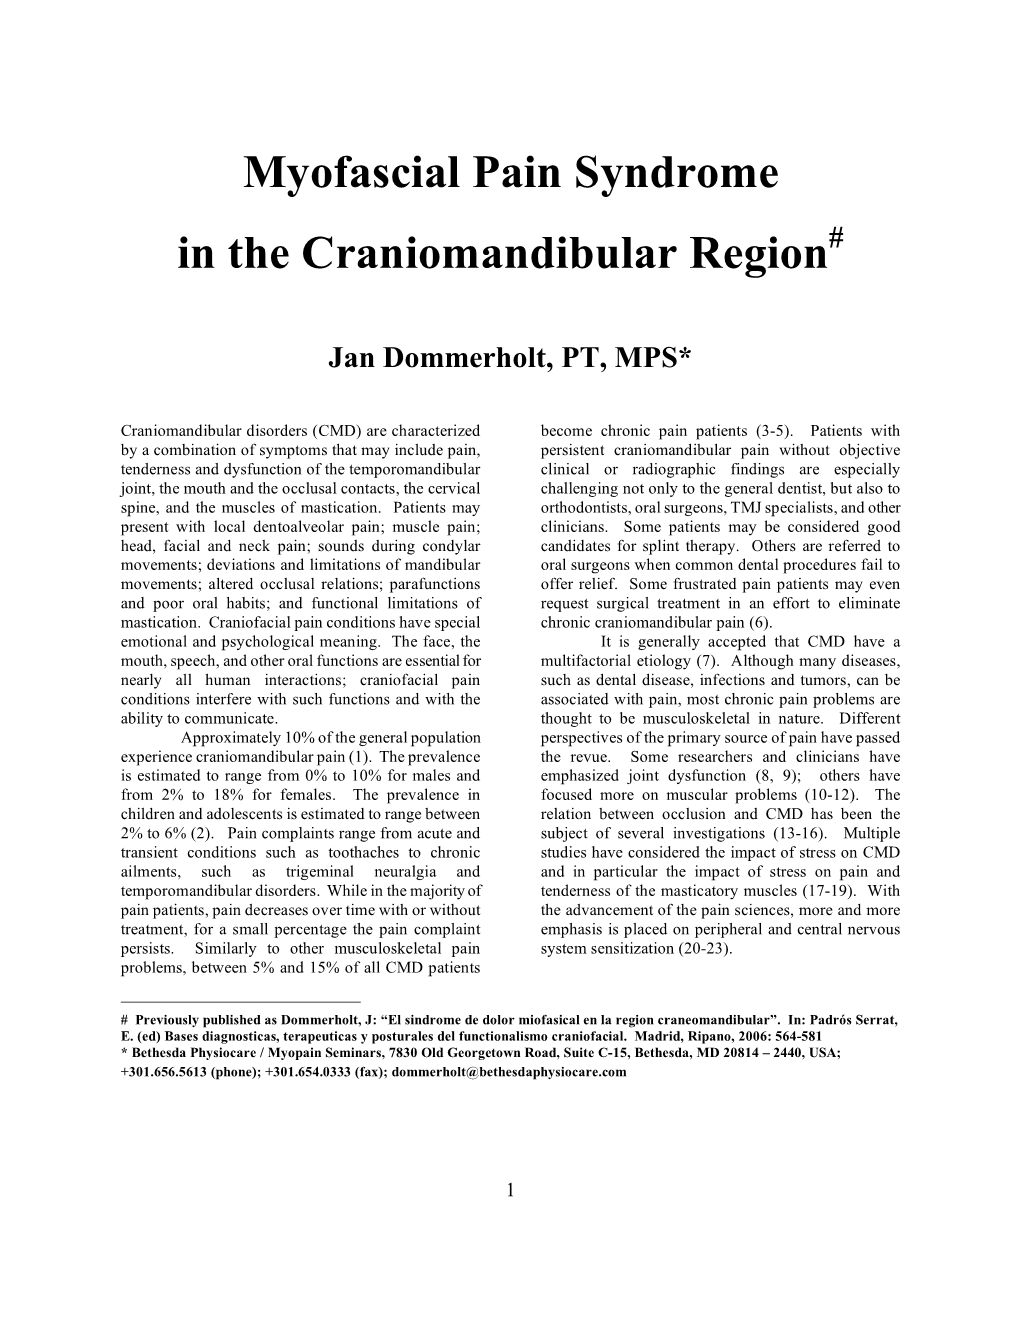 Myofascial Pain Syndrome in the Craniomandibular Region